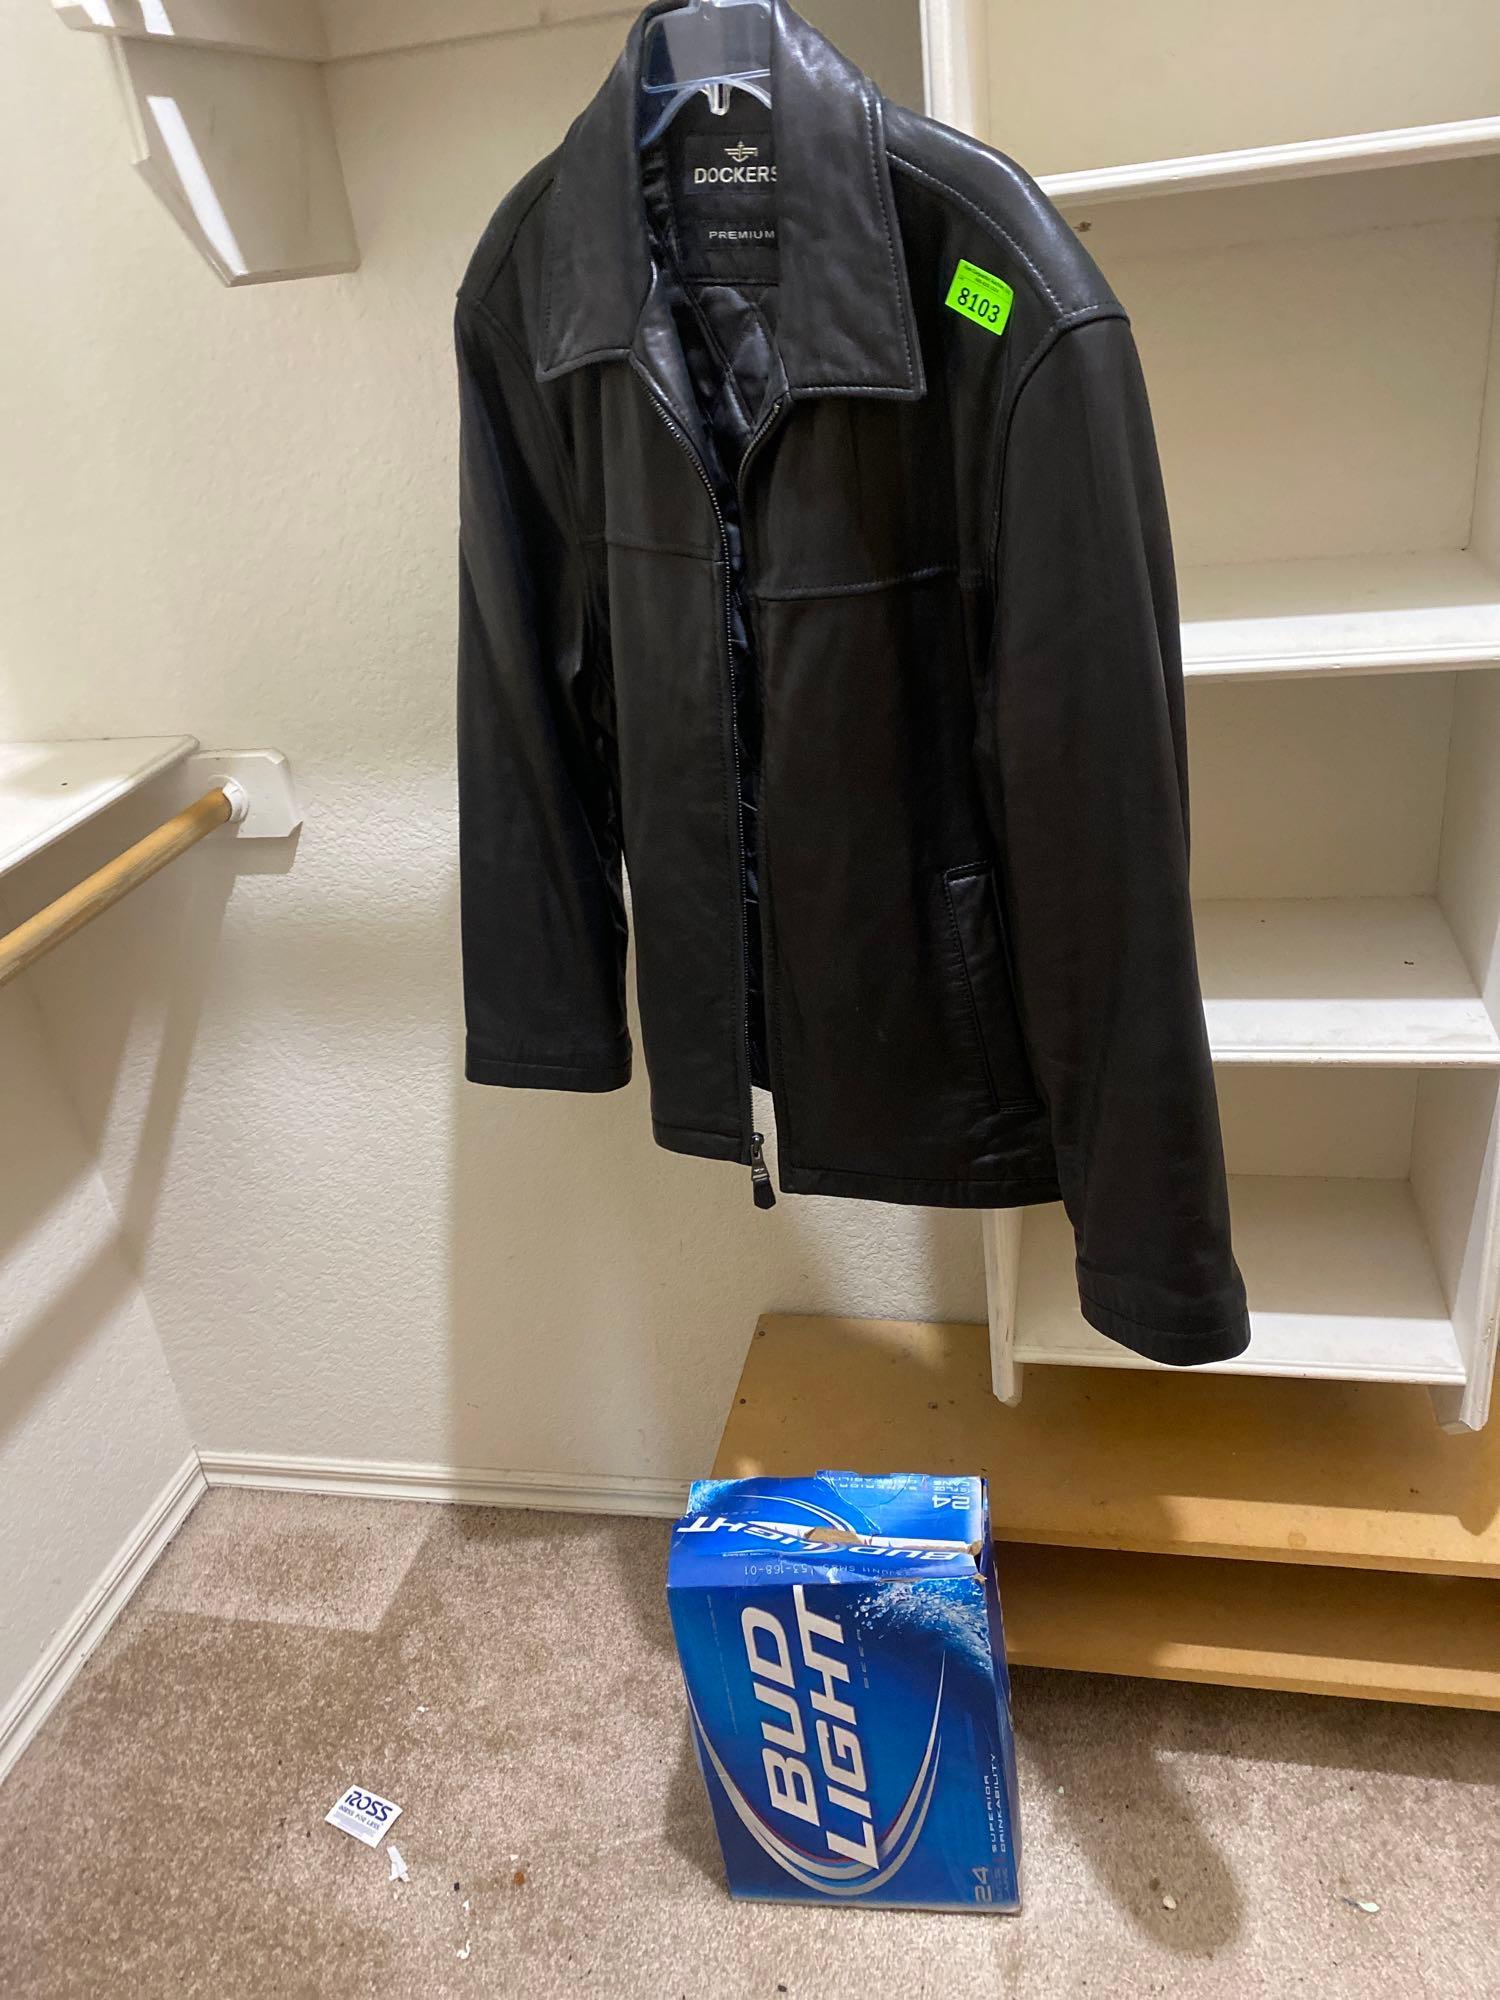 Dockers black leather jacket with Bud Light beer | Proxibid